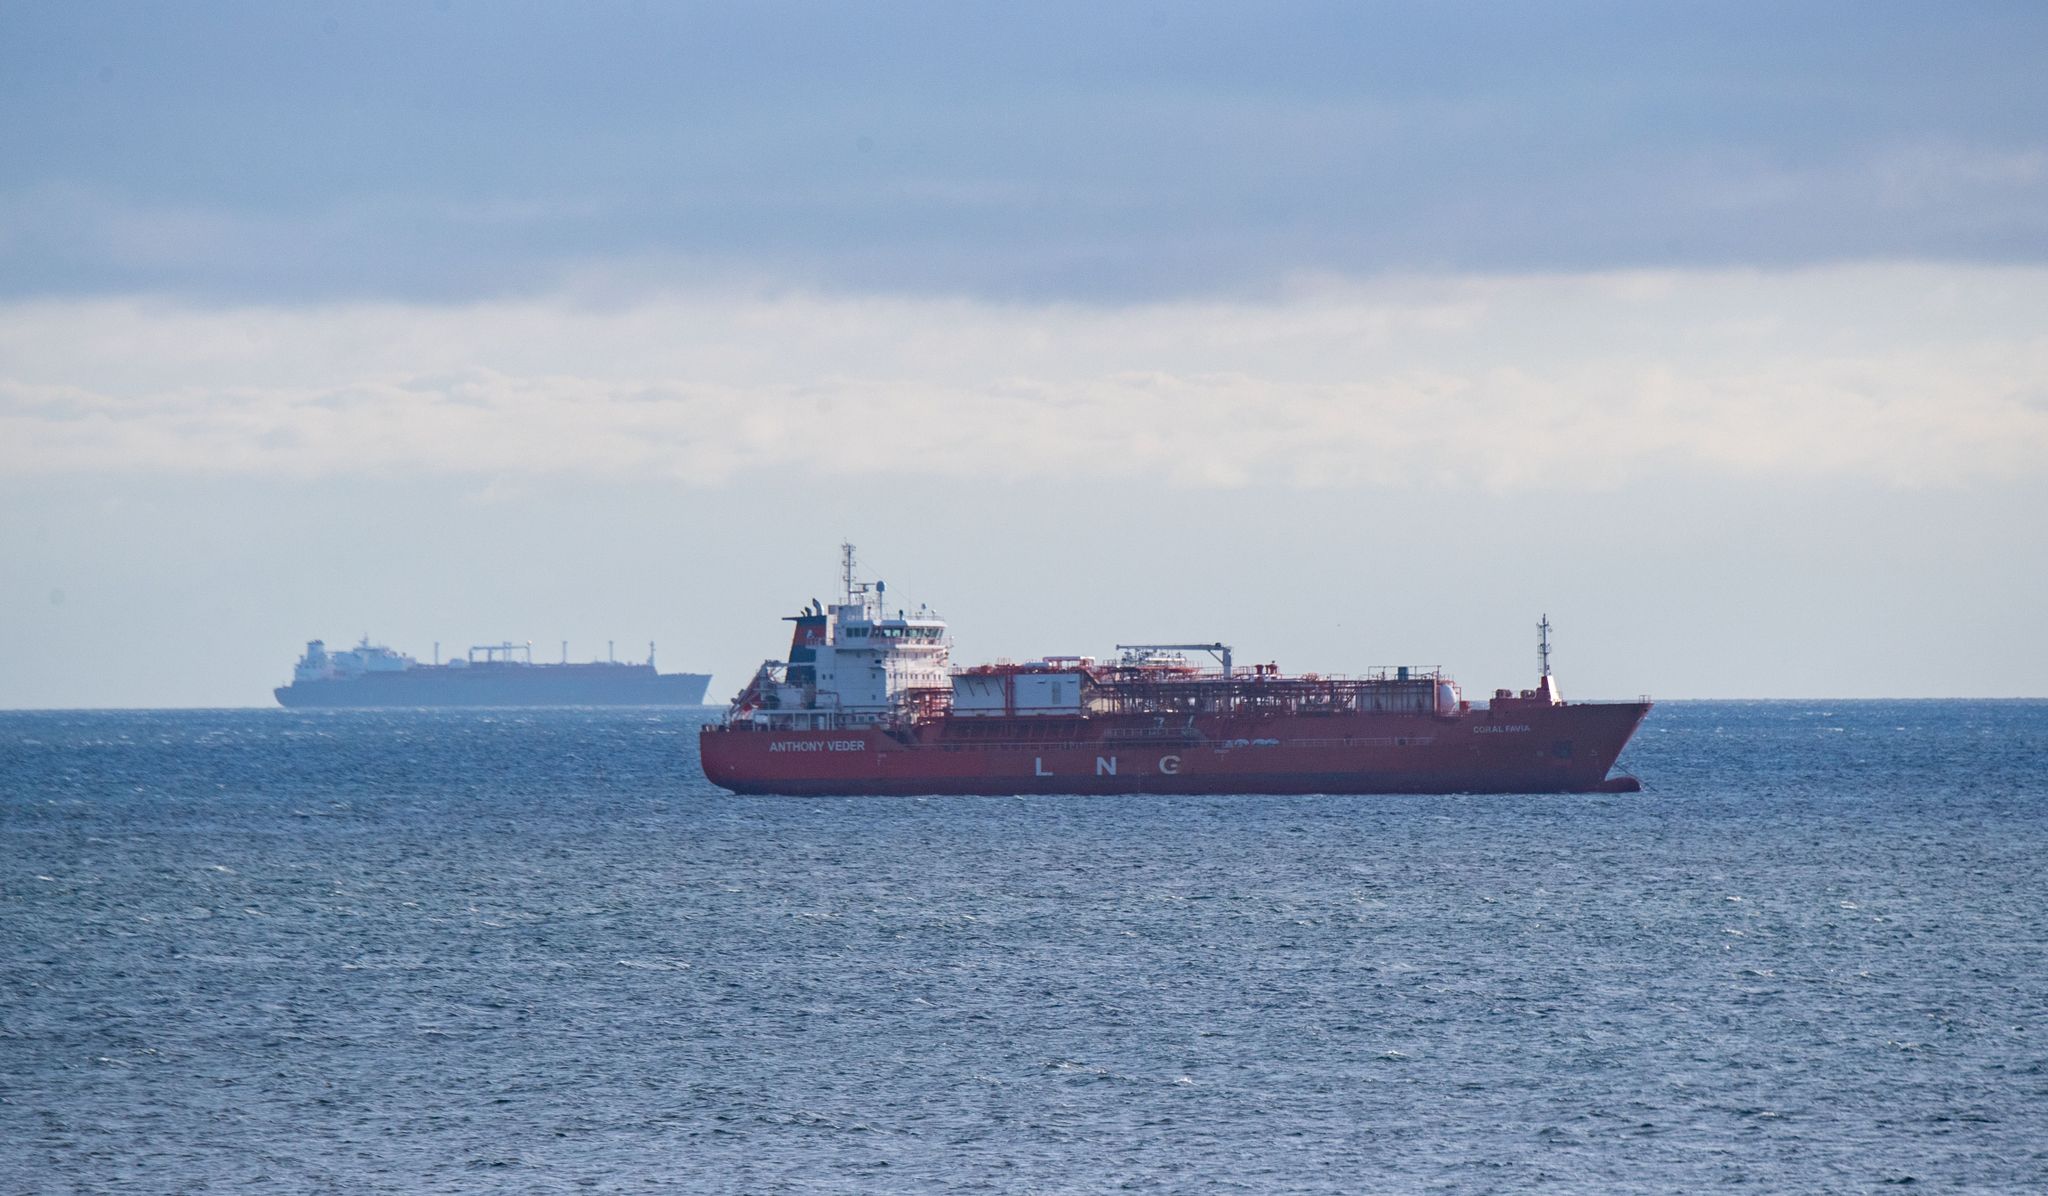 Der LNG-Shuttle-Tanker «Coral Favia» liegt vor der Hafenstadt vor Anker.